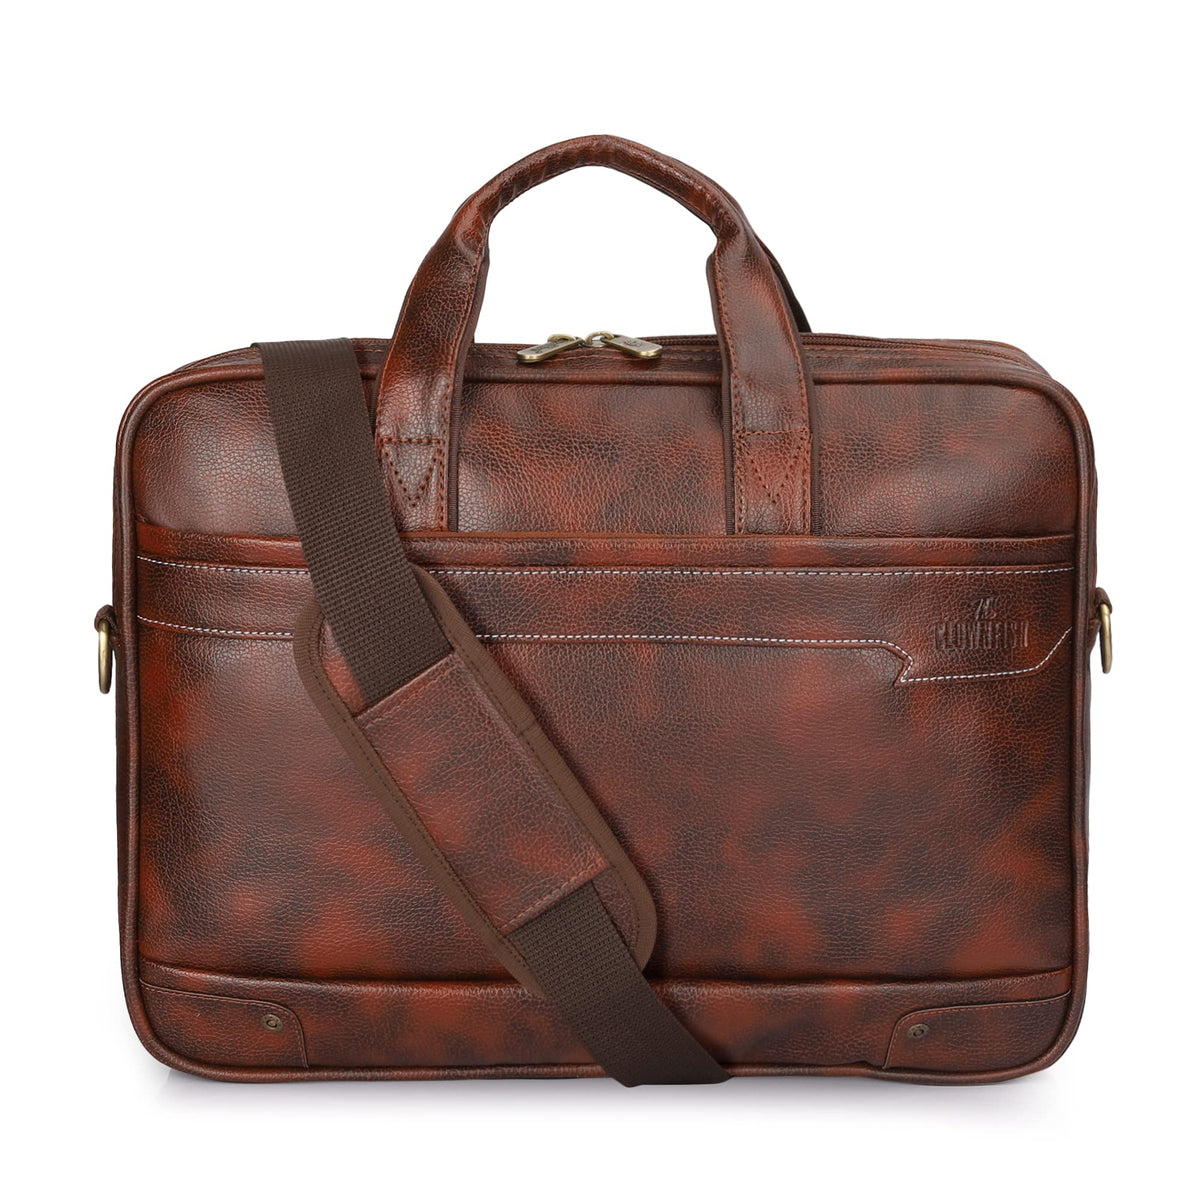 THE CLOWNFISH Faux Leather 15.6 inch Laptop Messenger Bag Briefcase Laptop Bags (Tan)